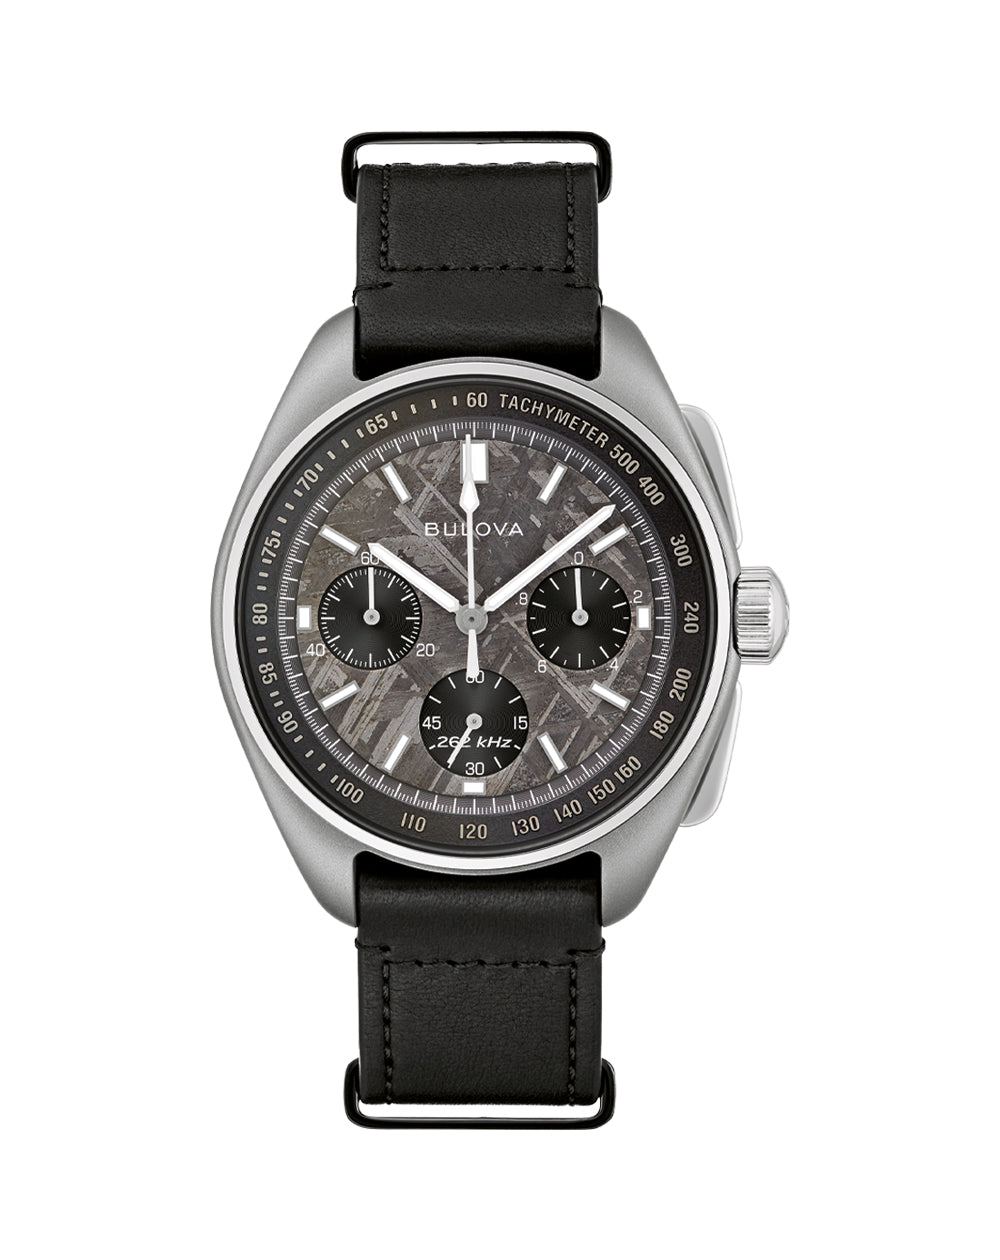 Archive Series Limited Edition Lunar Pilot Watch 96A312